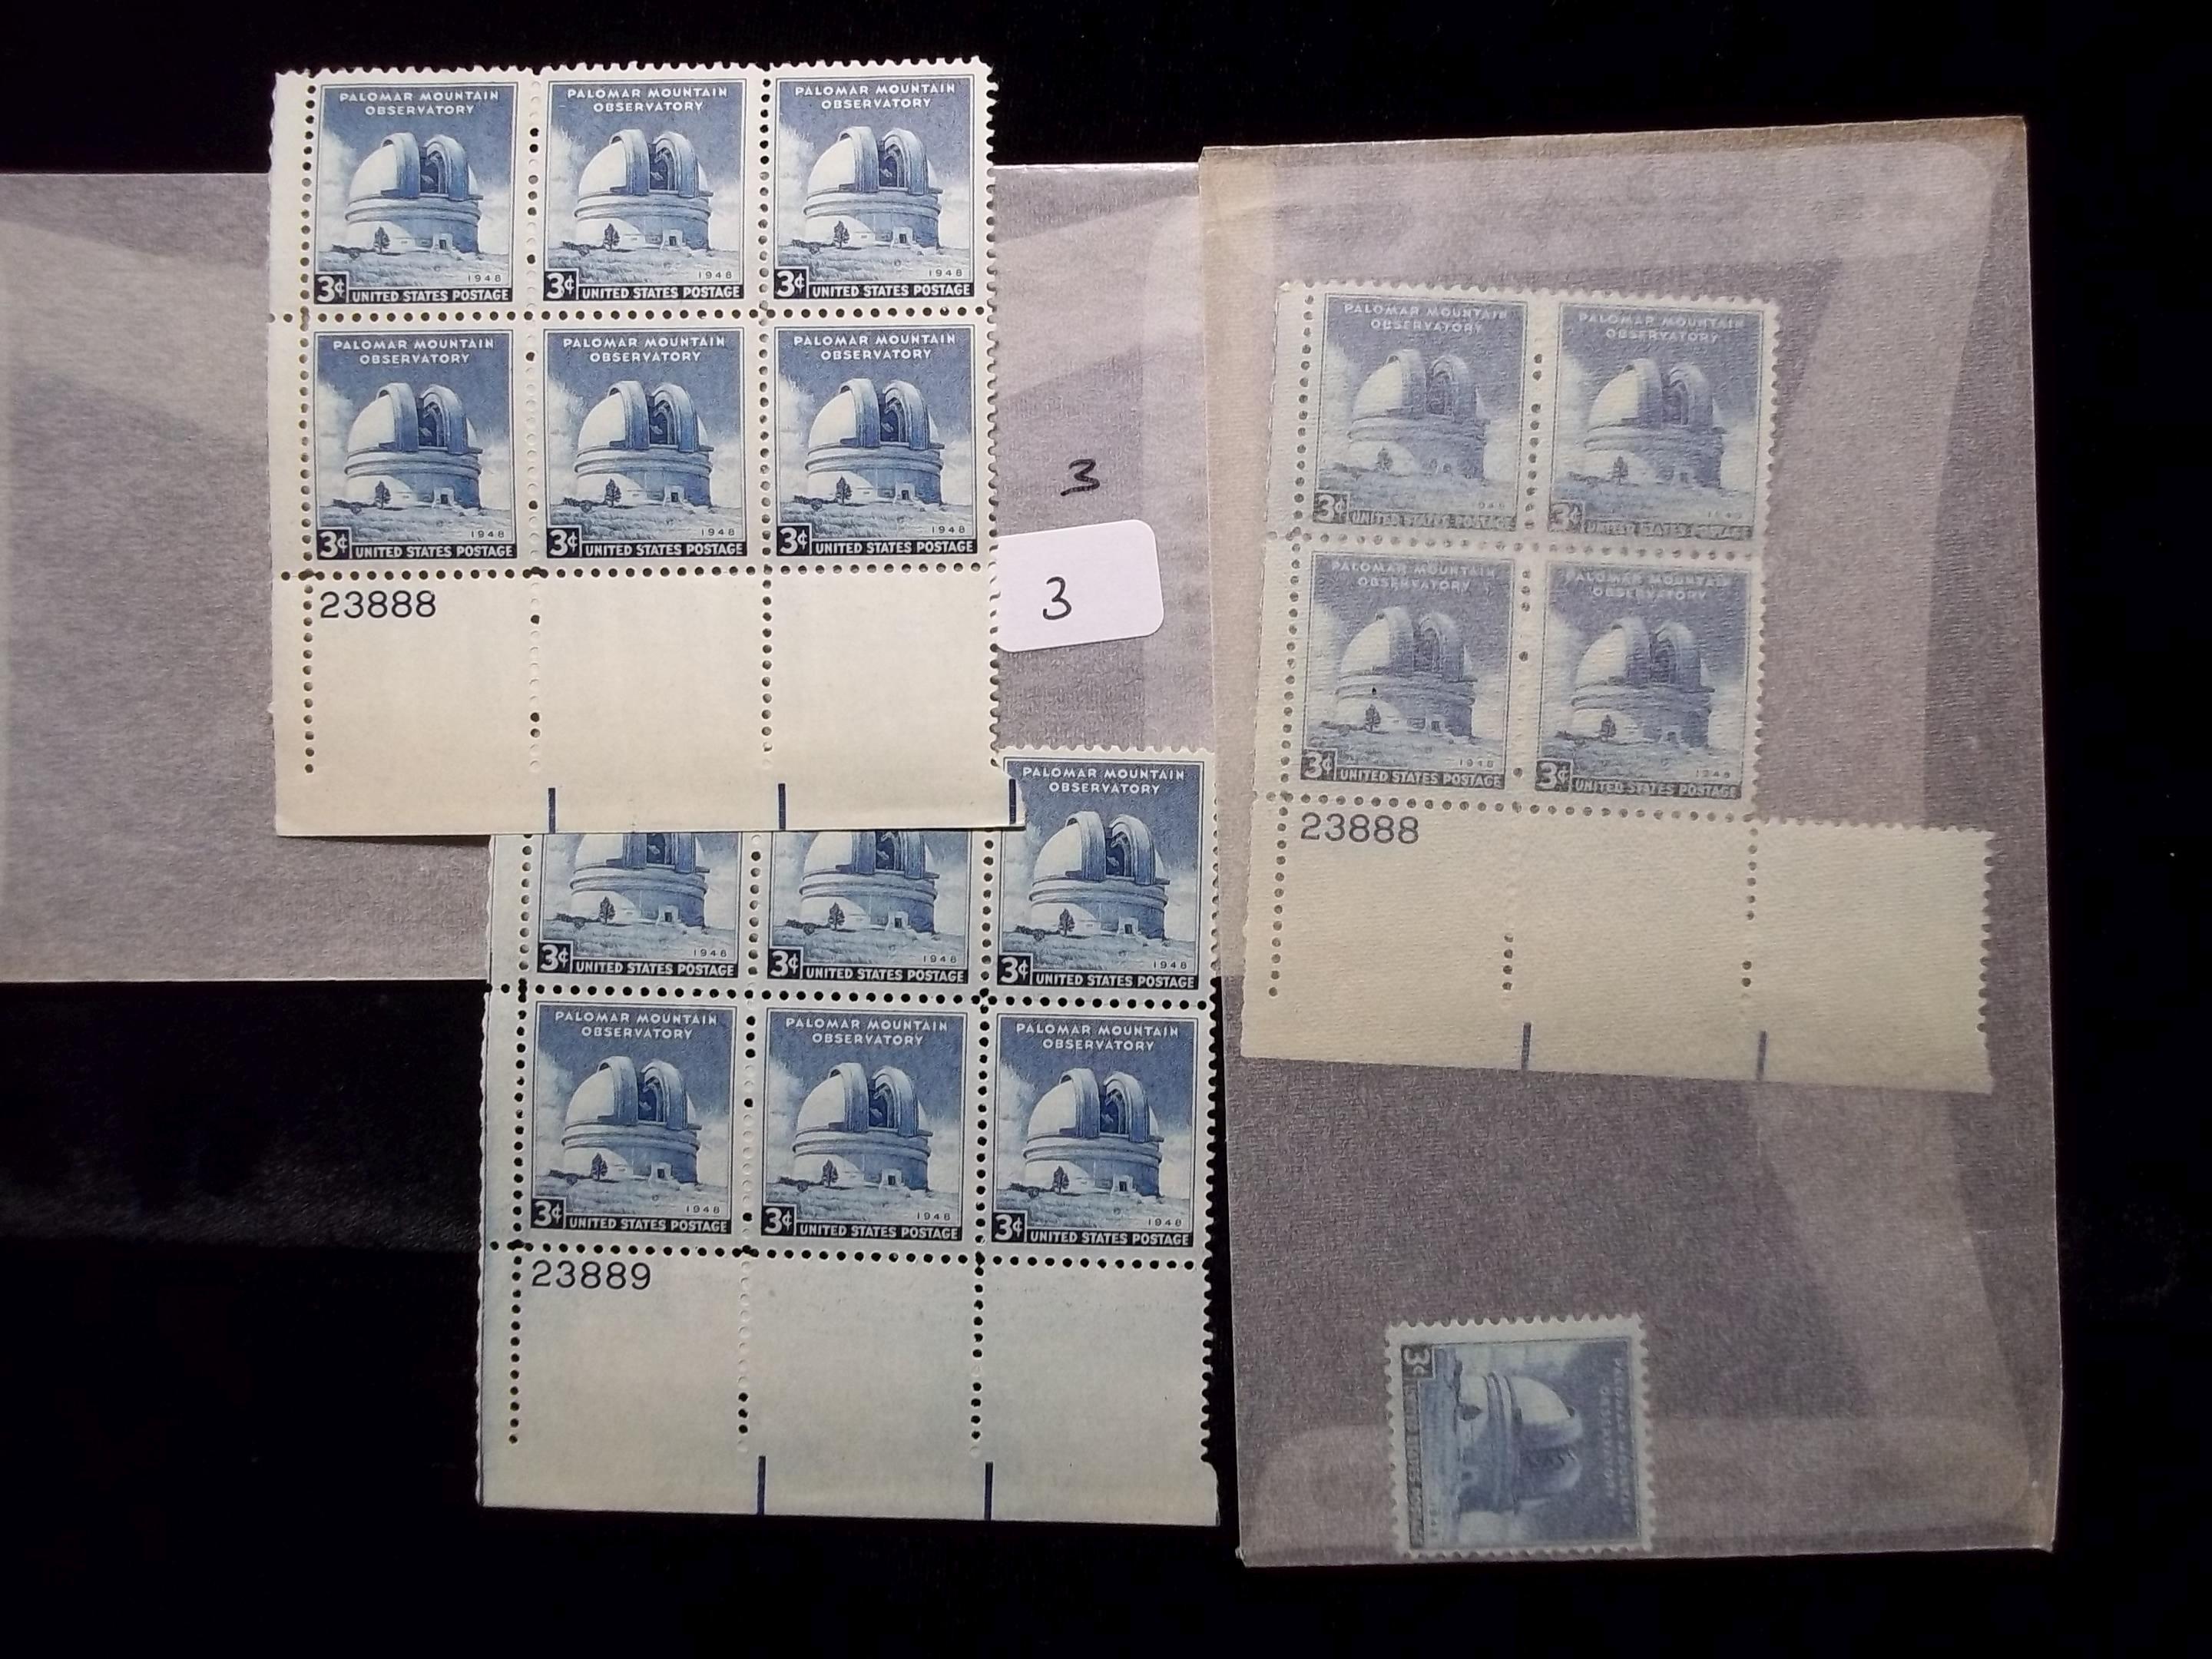 United States Postage Stamps Mint Plate Block Lot Of 3 Blocks Palomar Mtn 1948